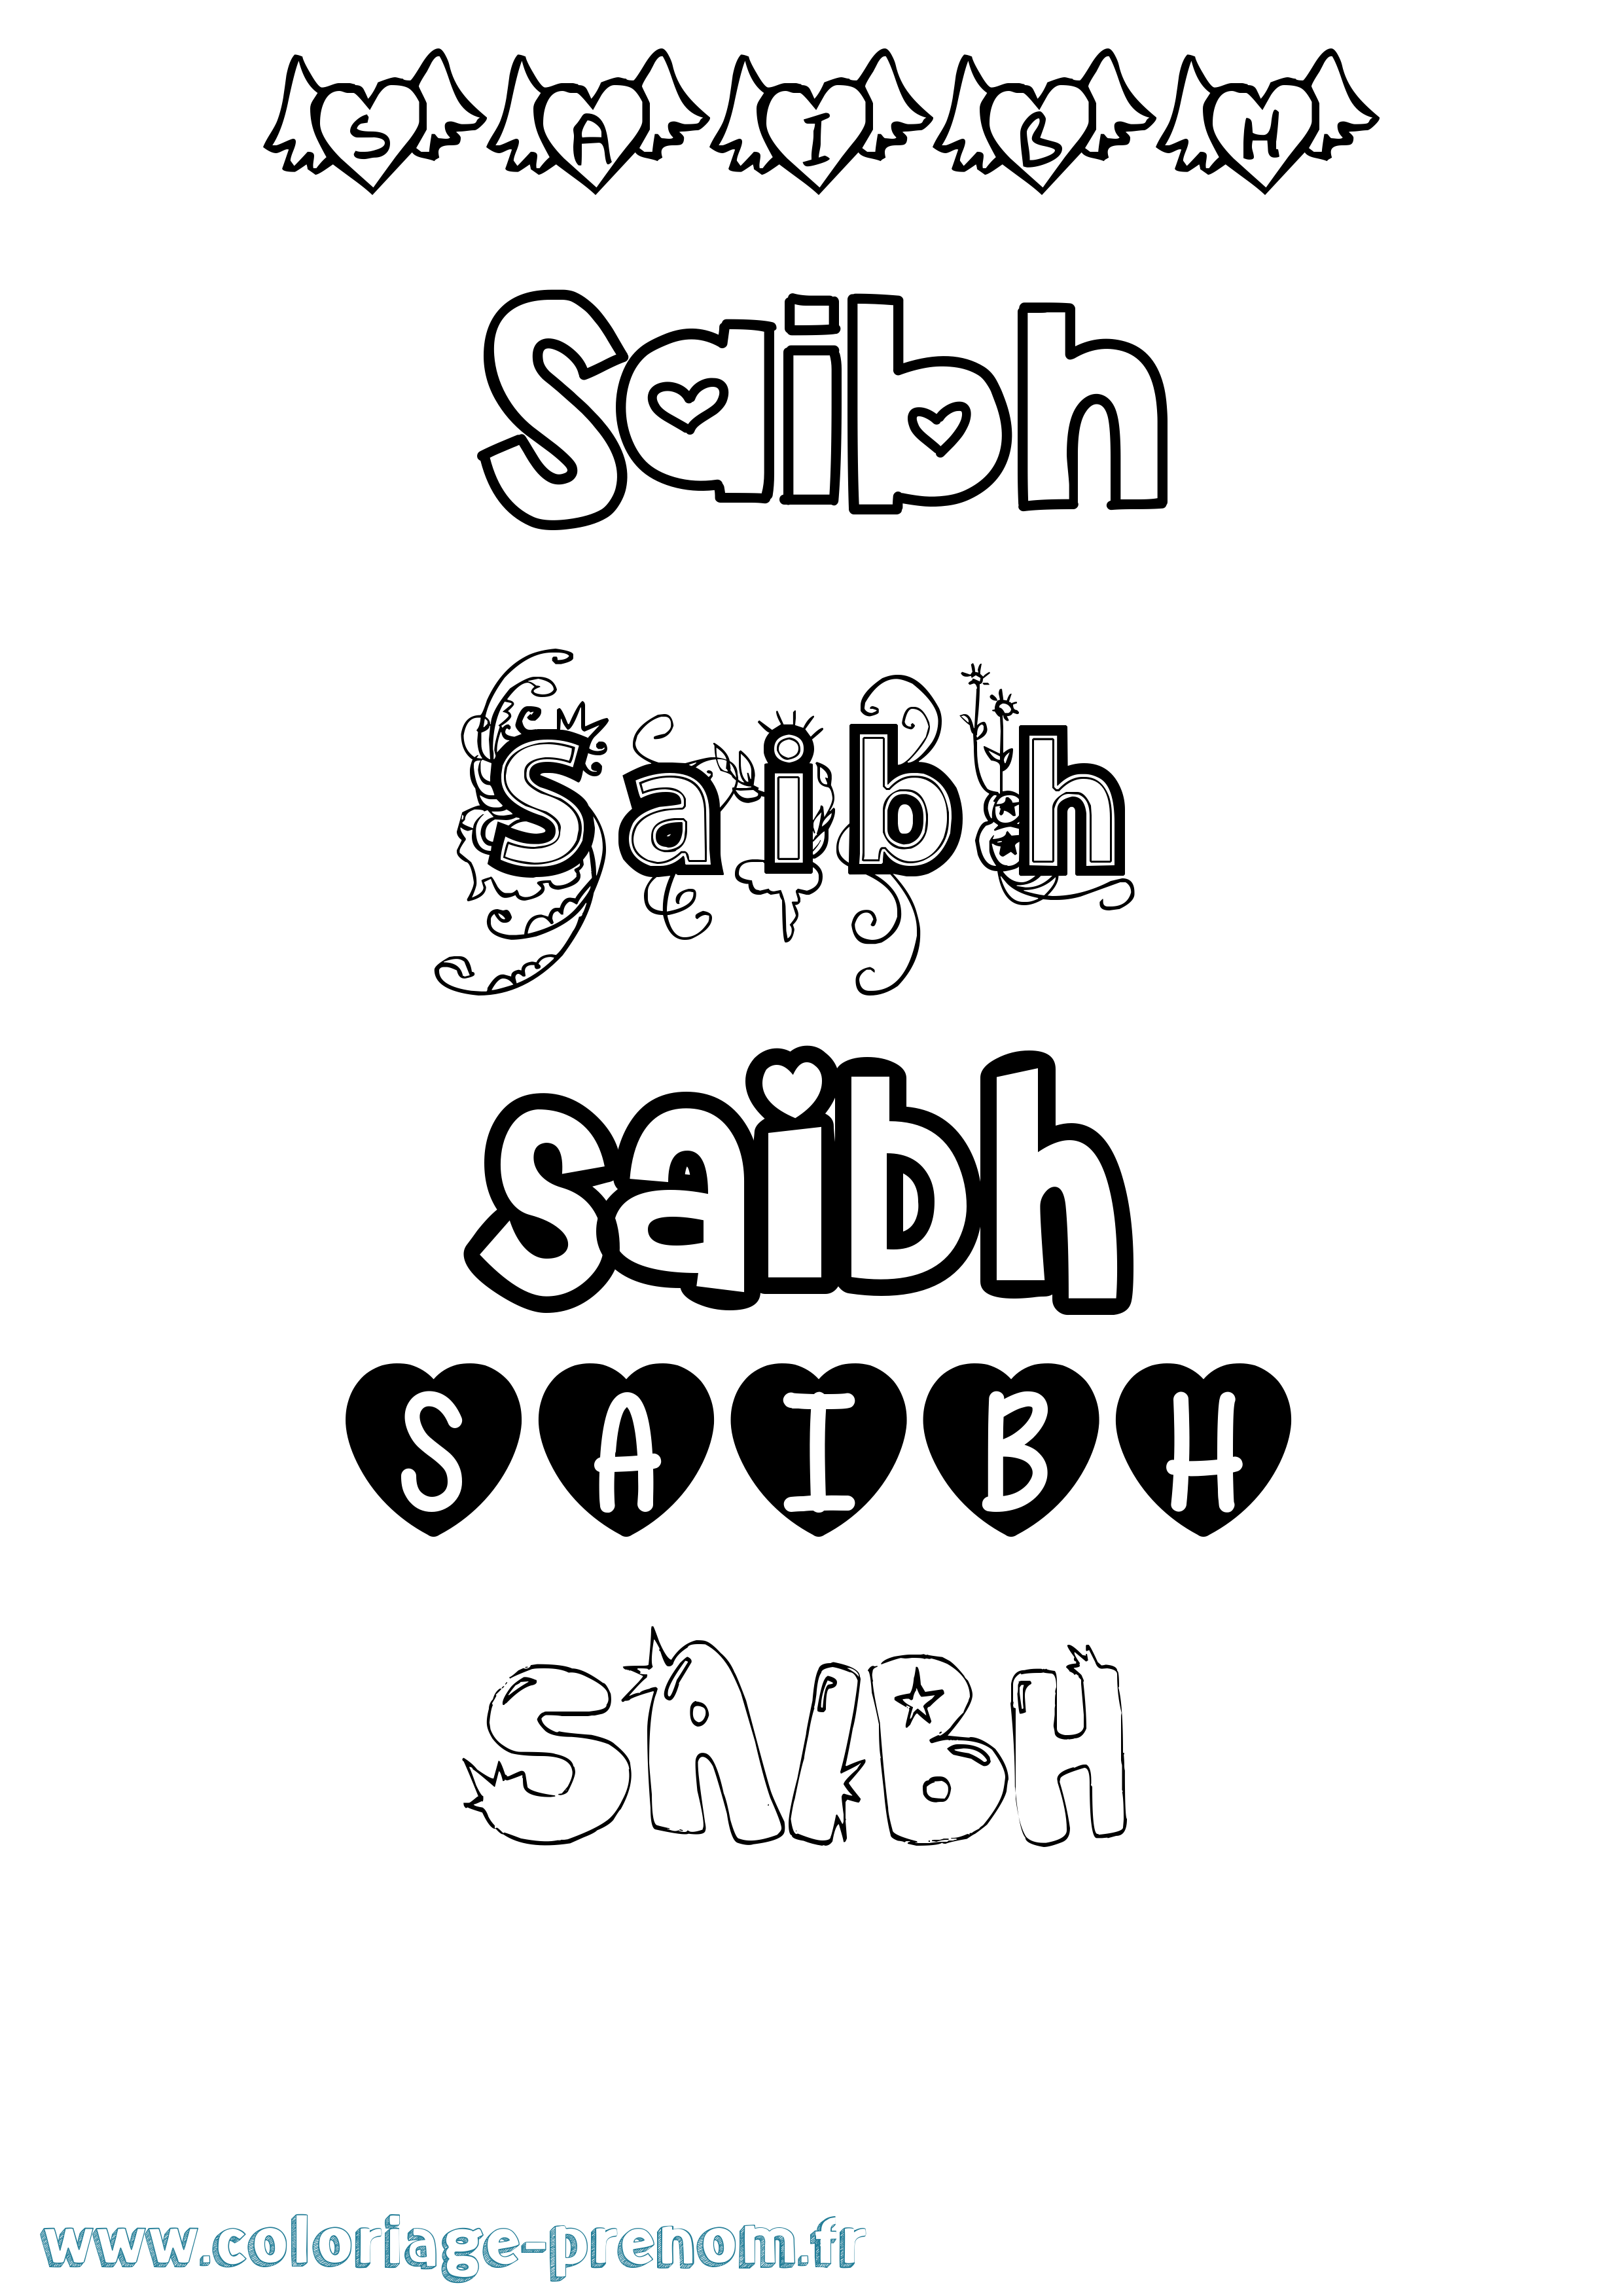 Coloriage prénom Saibh Girly